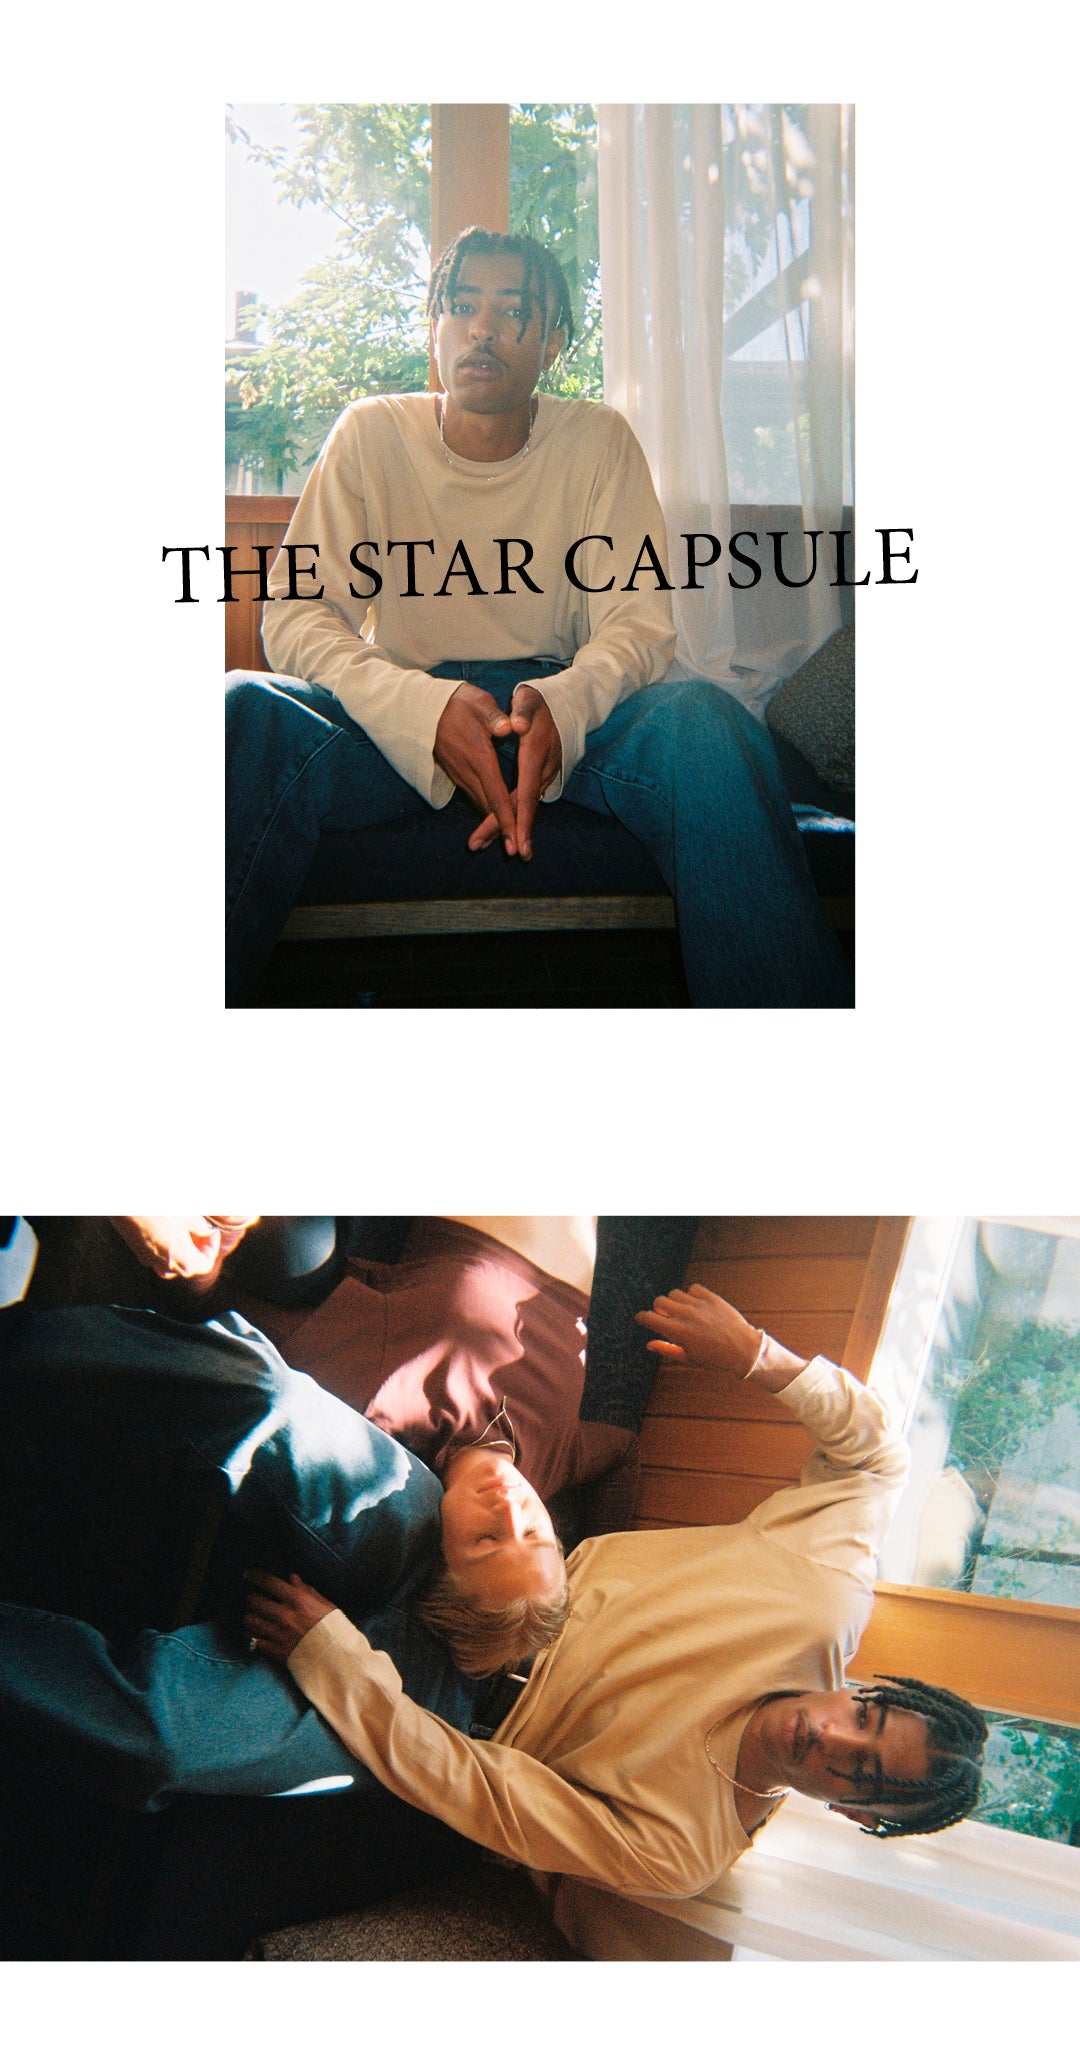 The Star Capsule